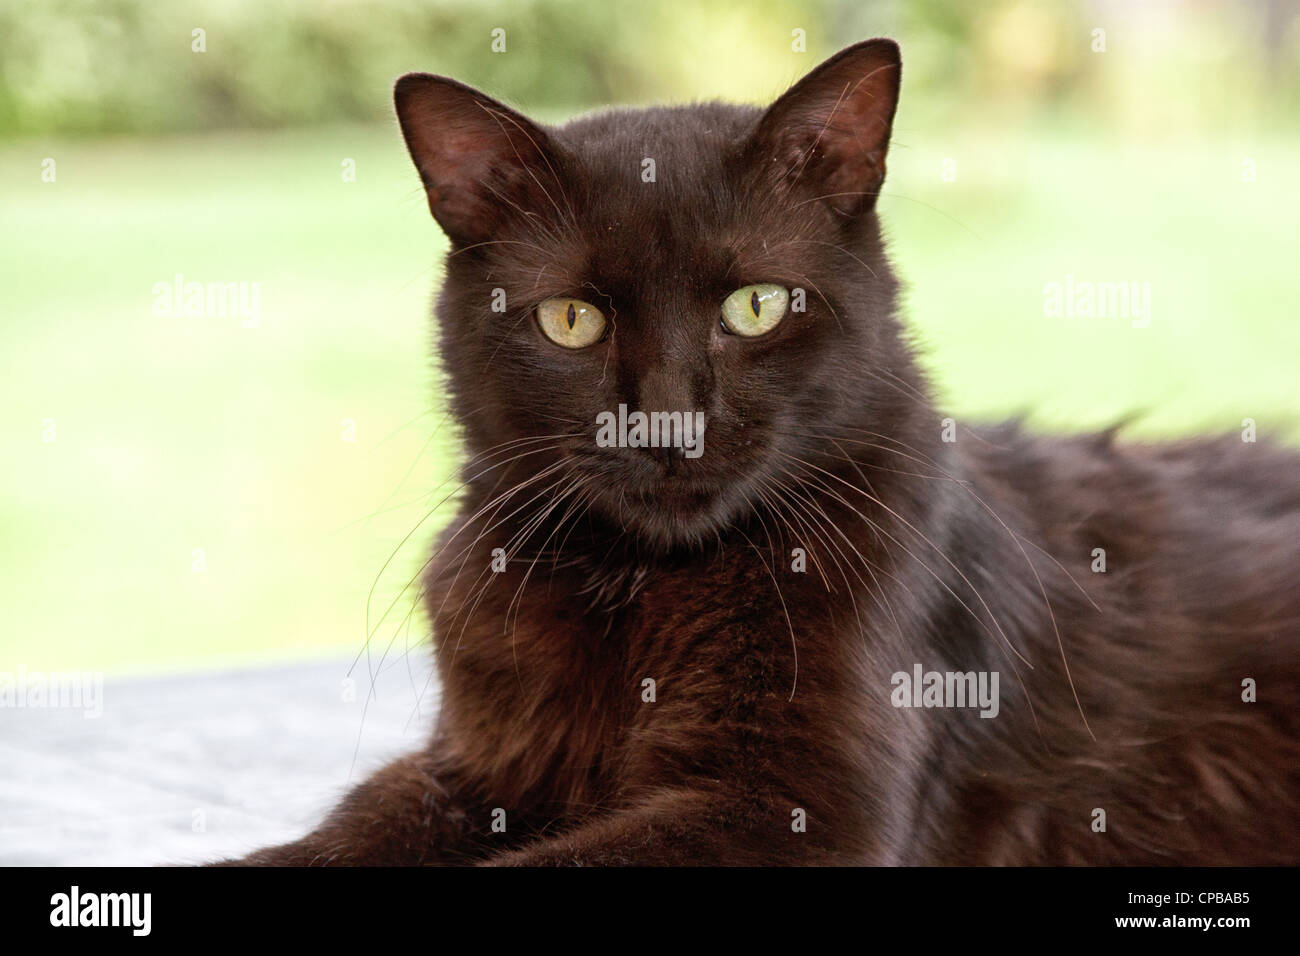 Black cat close-up portrait on green background. Stock Photo